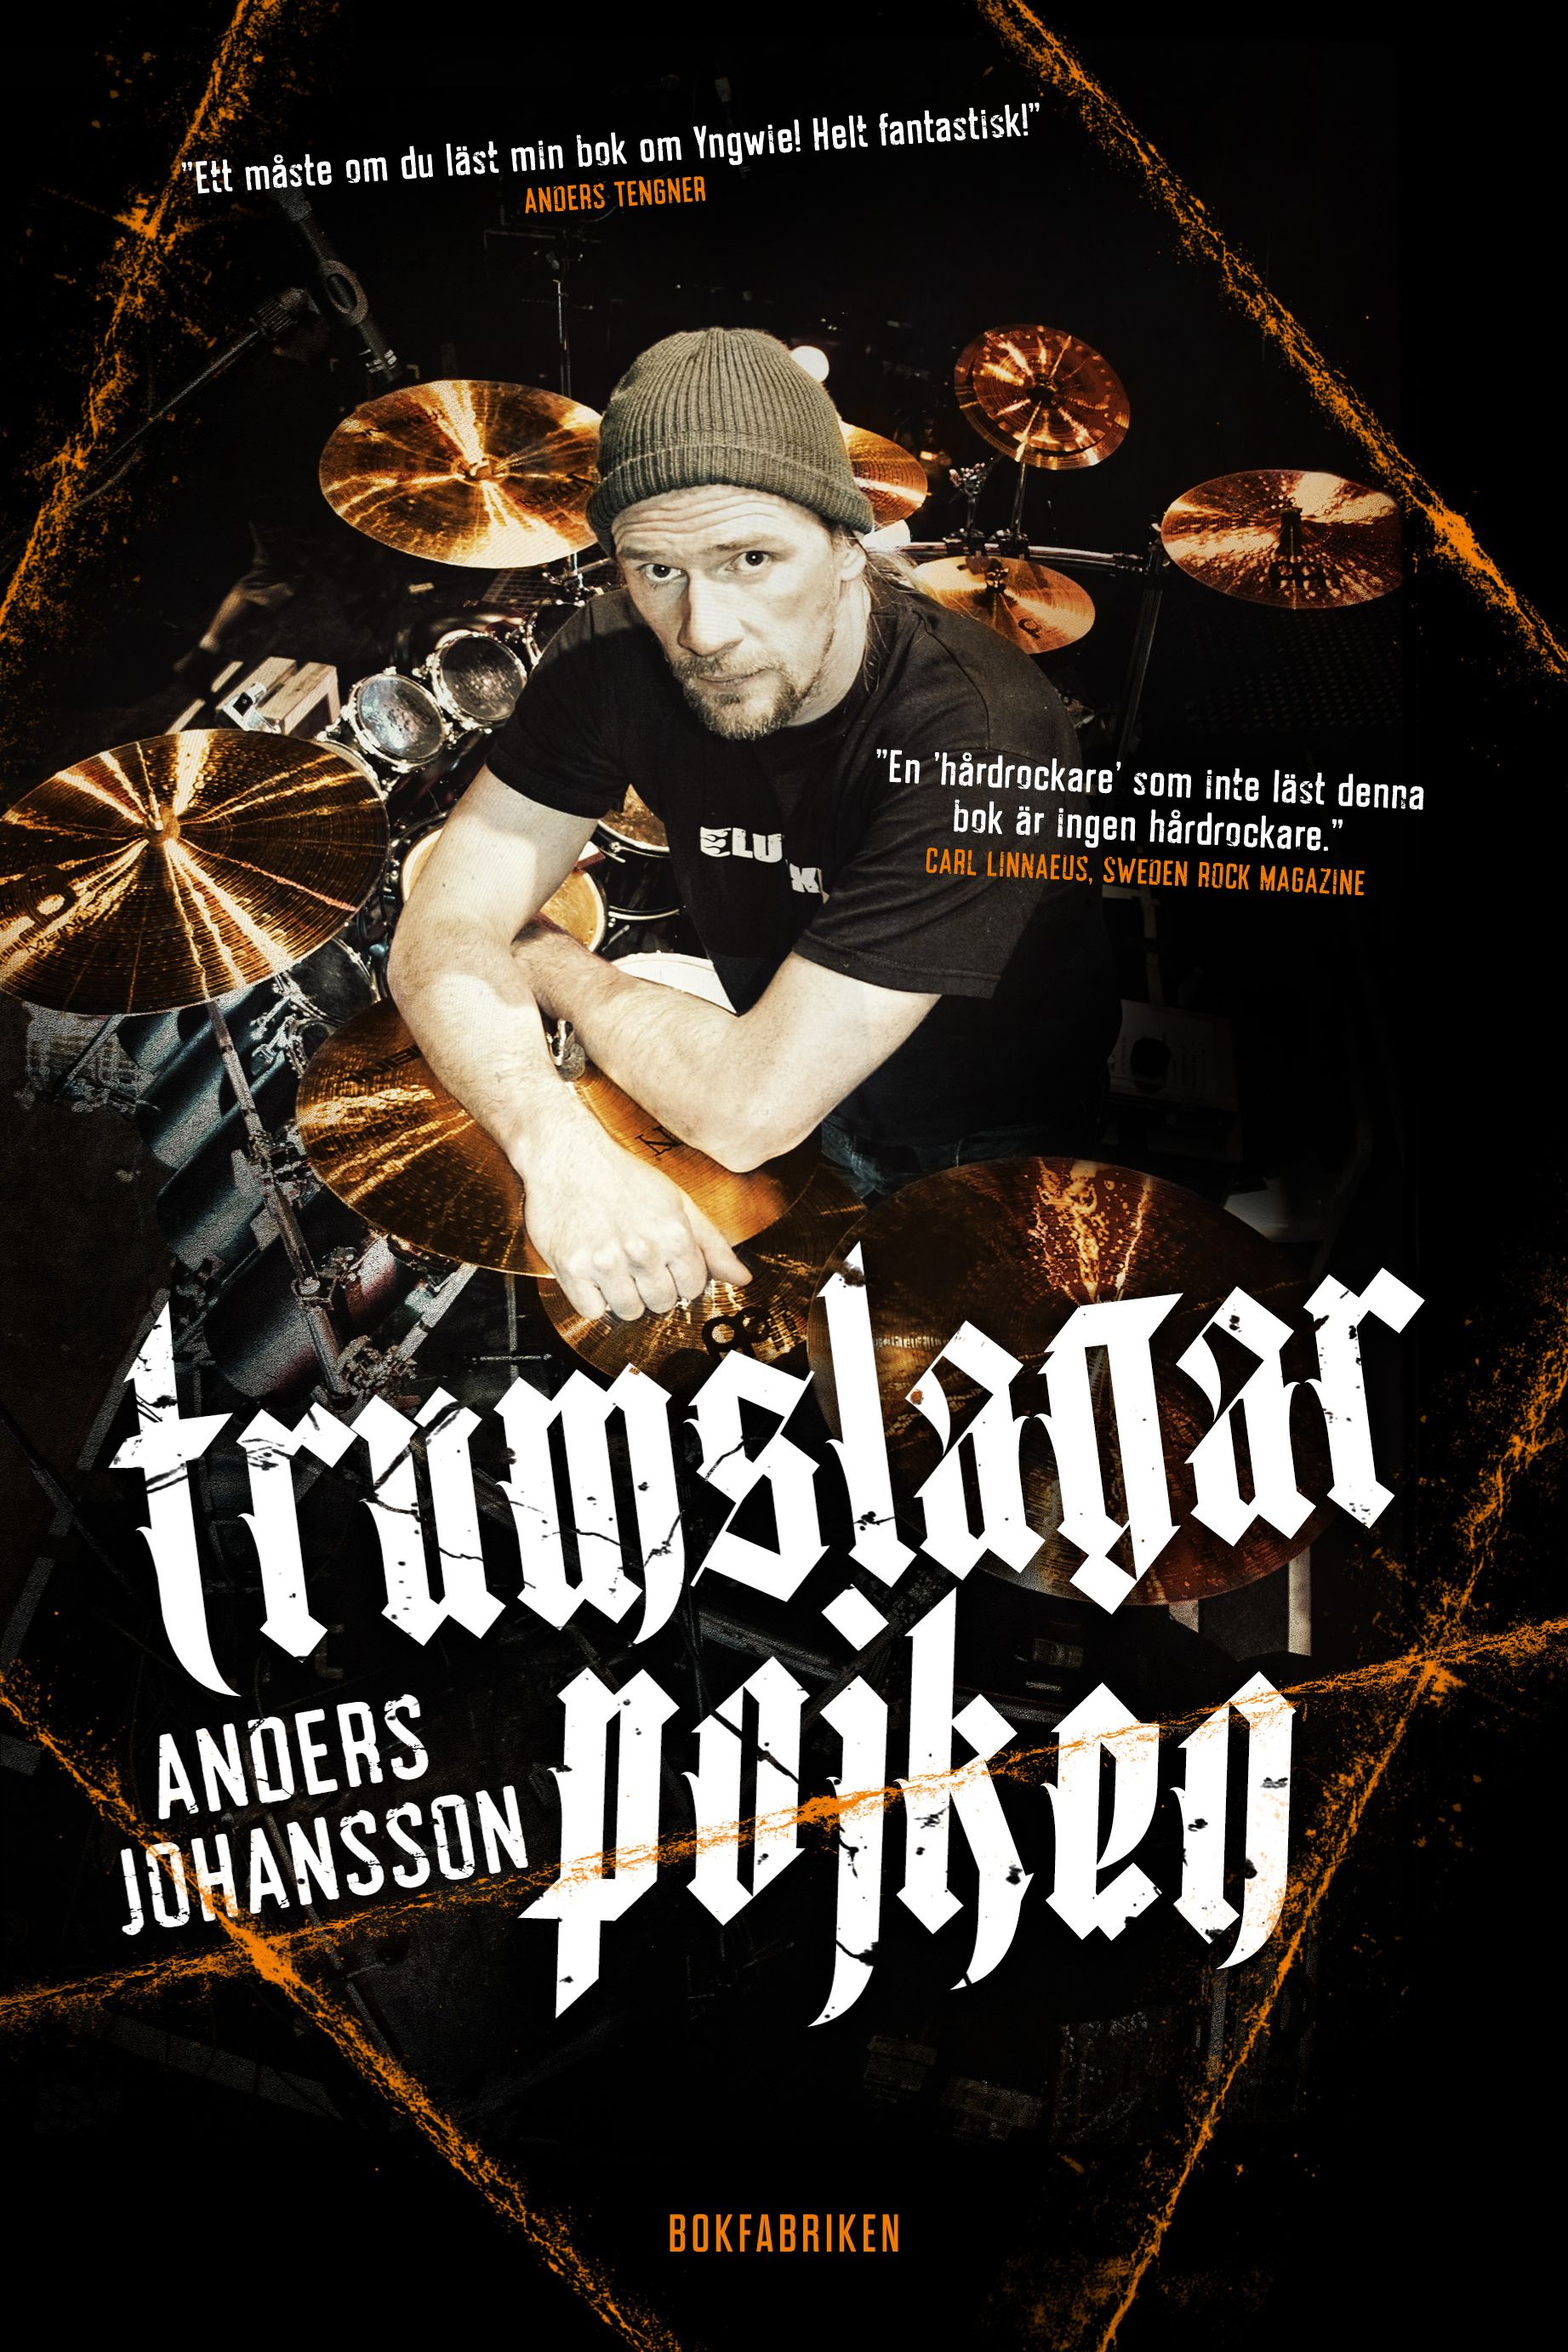 Trumslagarpojken, lydbog af Anders Johansson